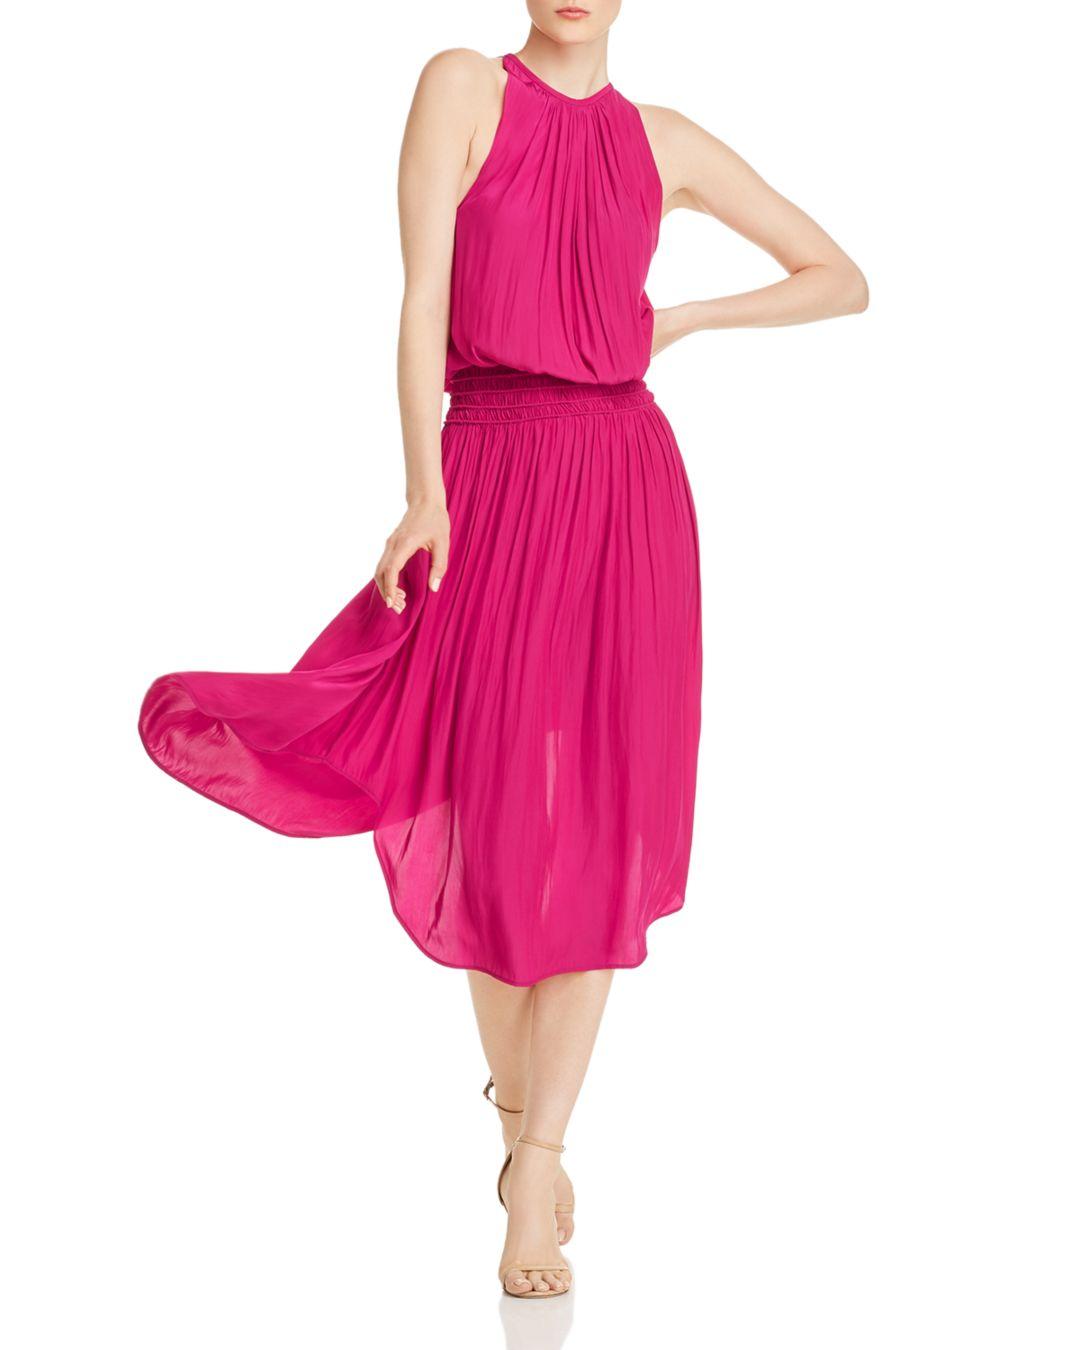 Ramy Brook Synthetic Audrey Midi Dress in Deep Fuschia (Pink) - Lyst